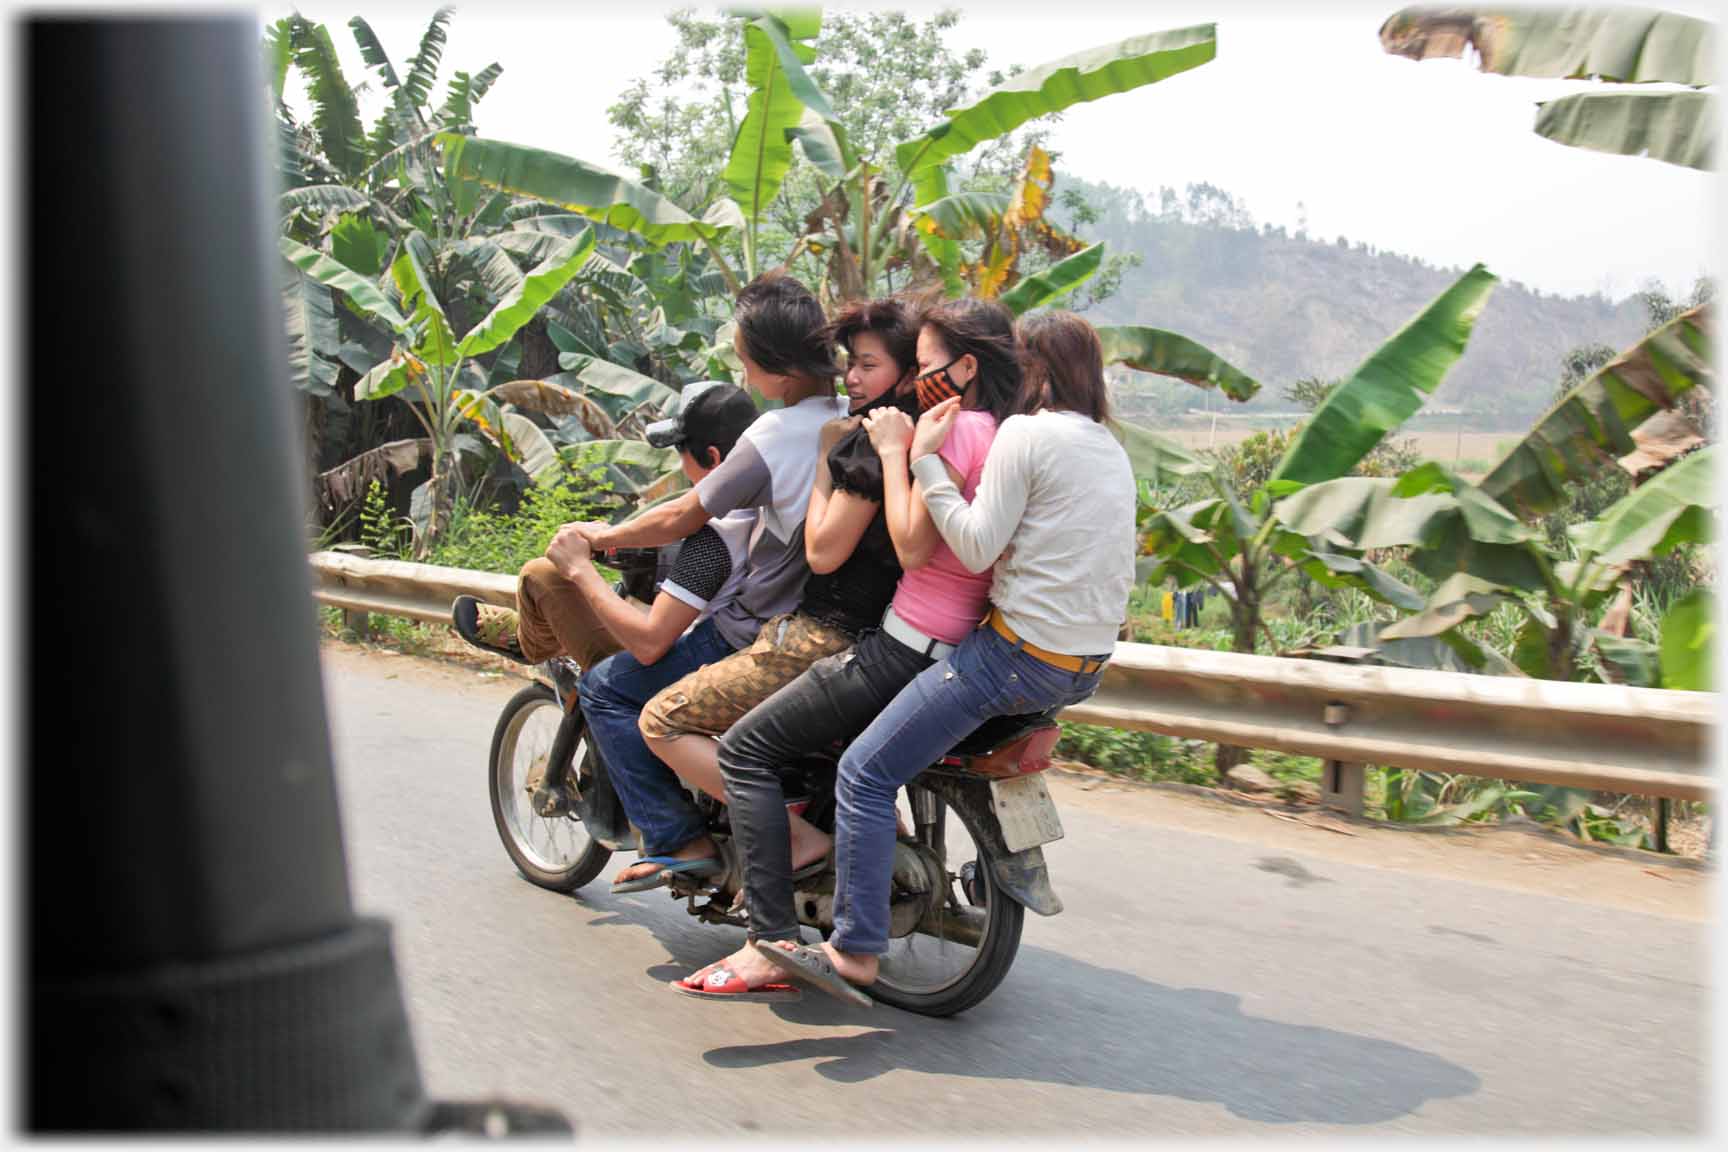 Five people on a motorbike.